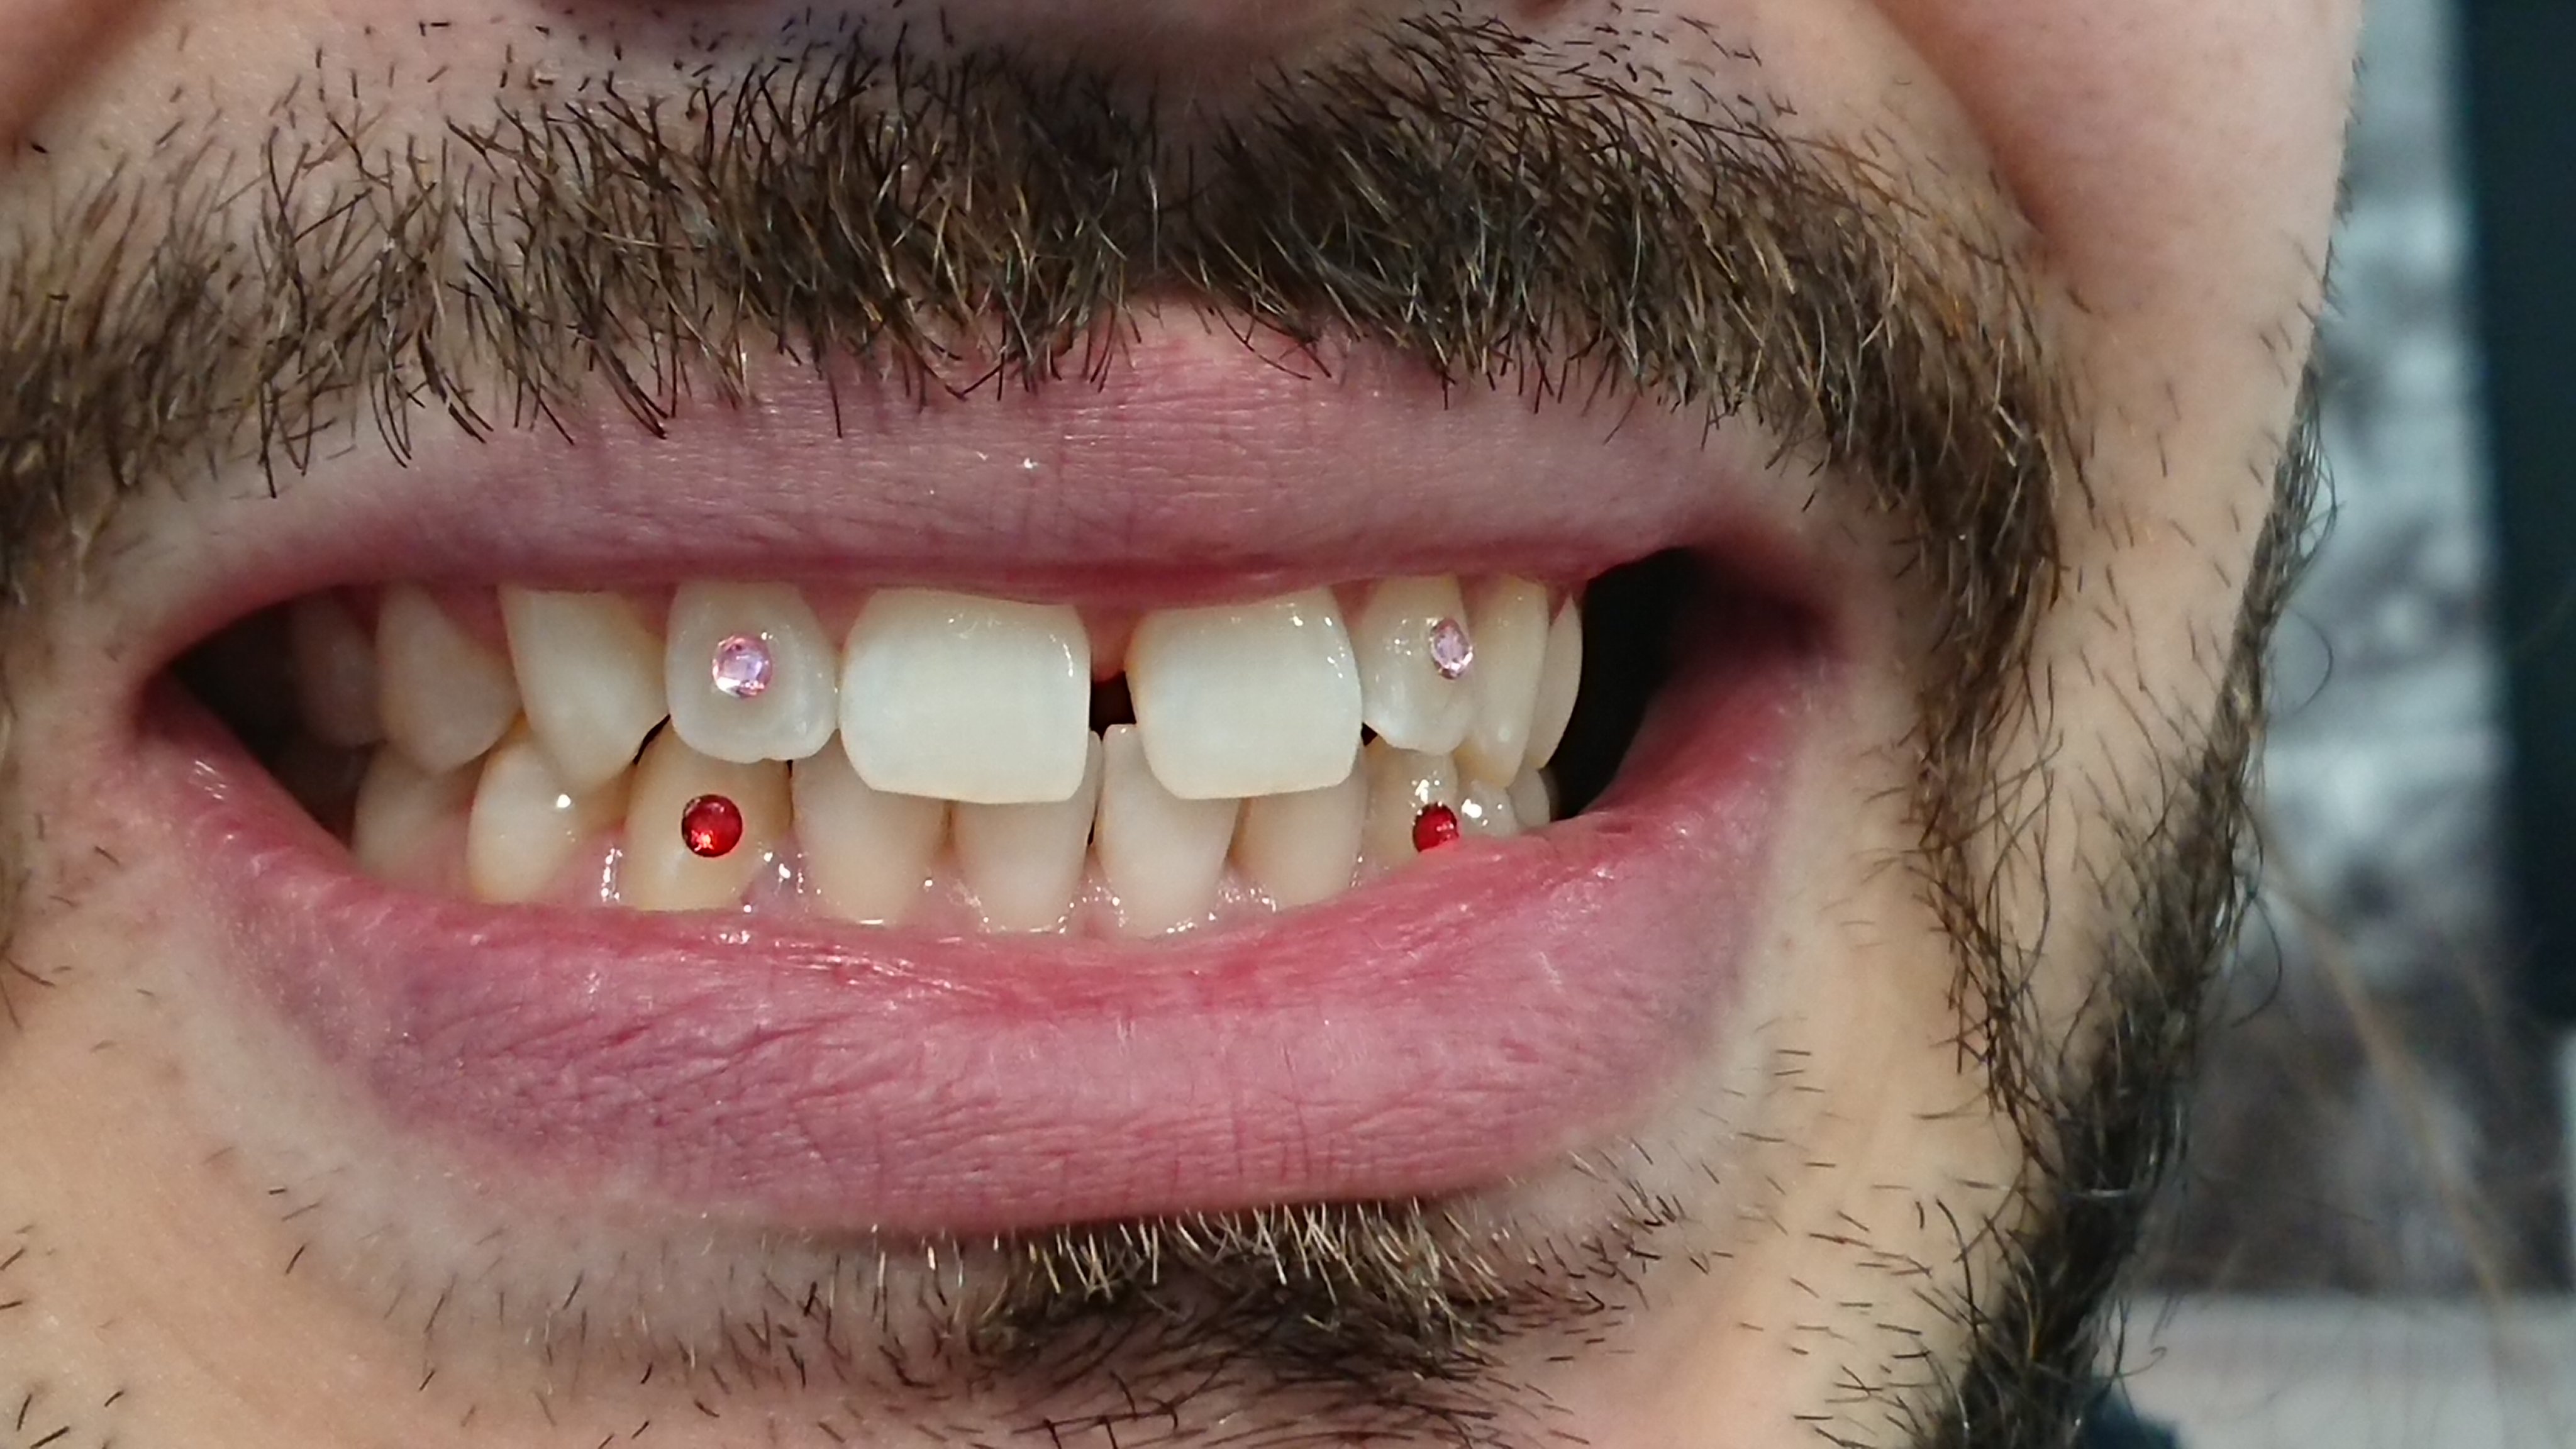 Swarovski tooth Gems